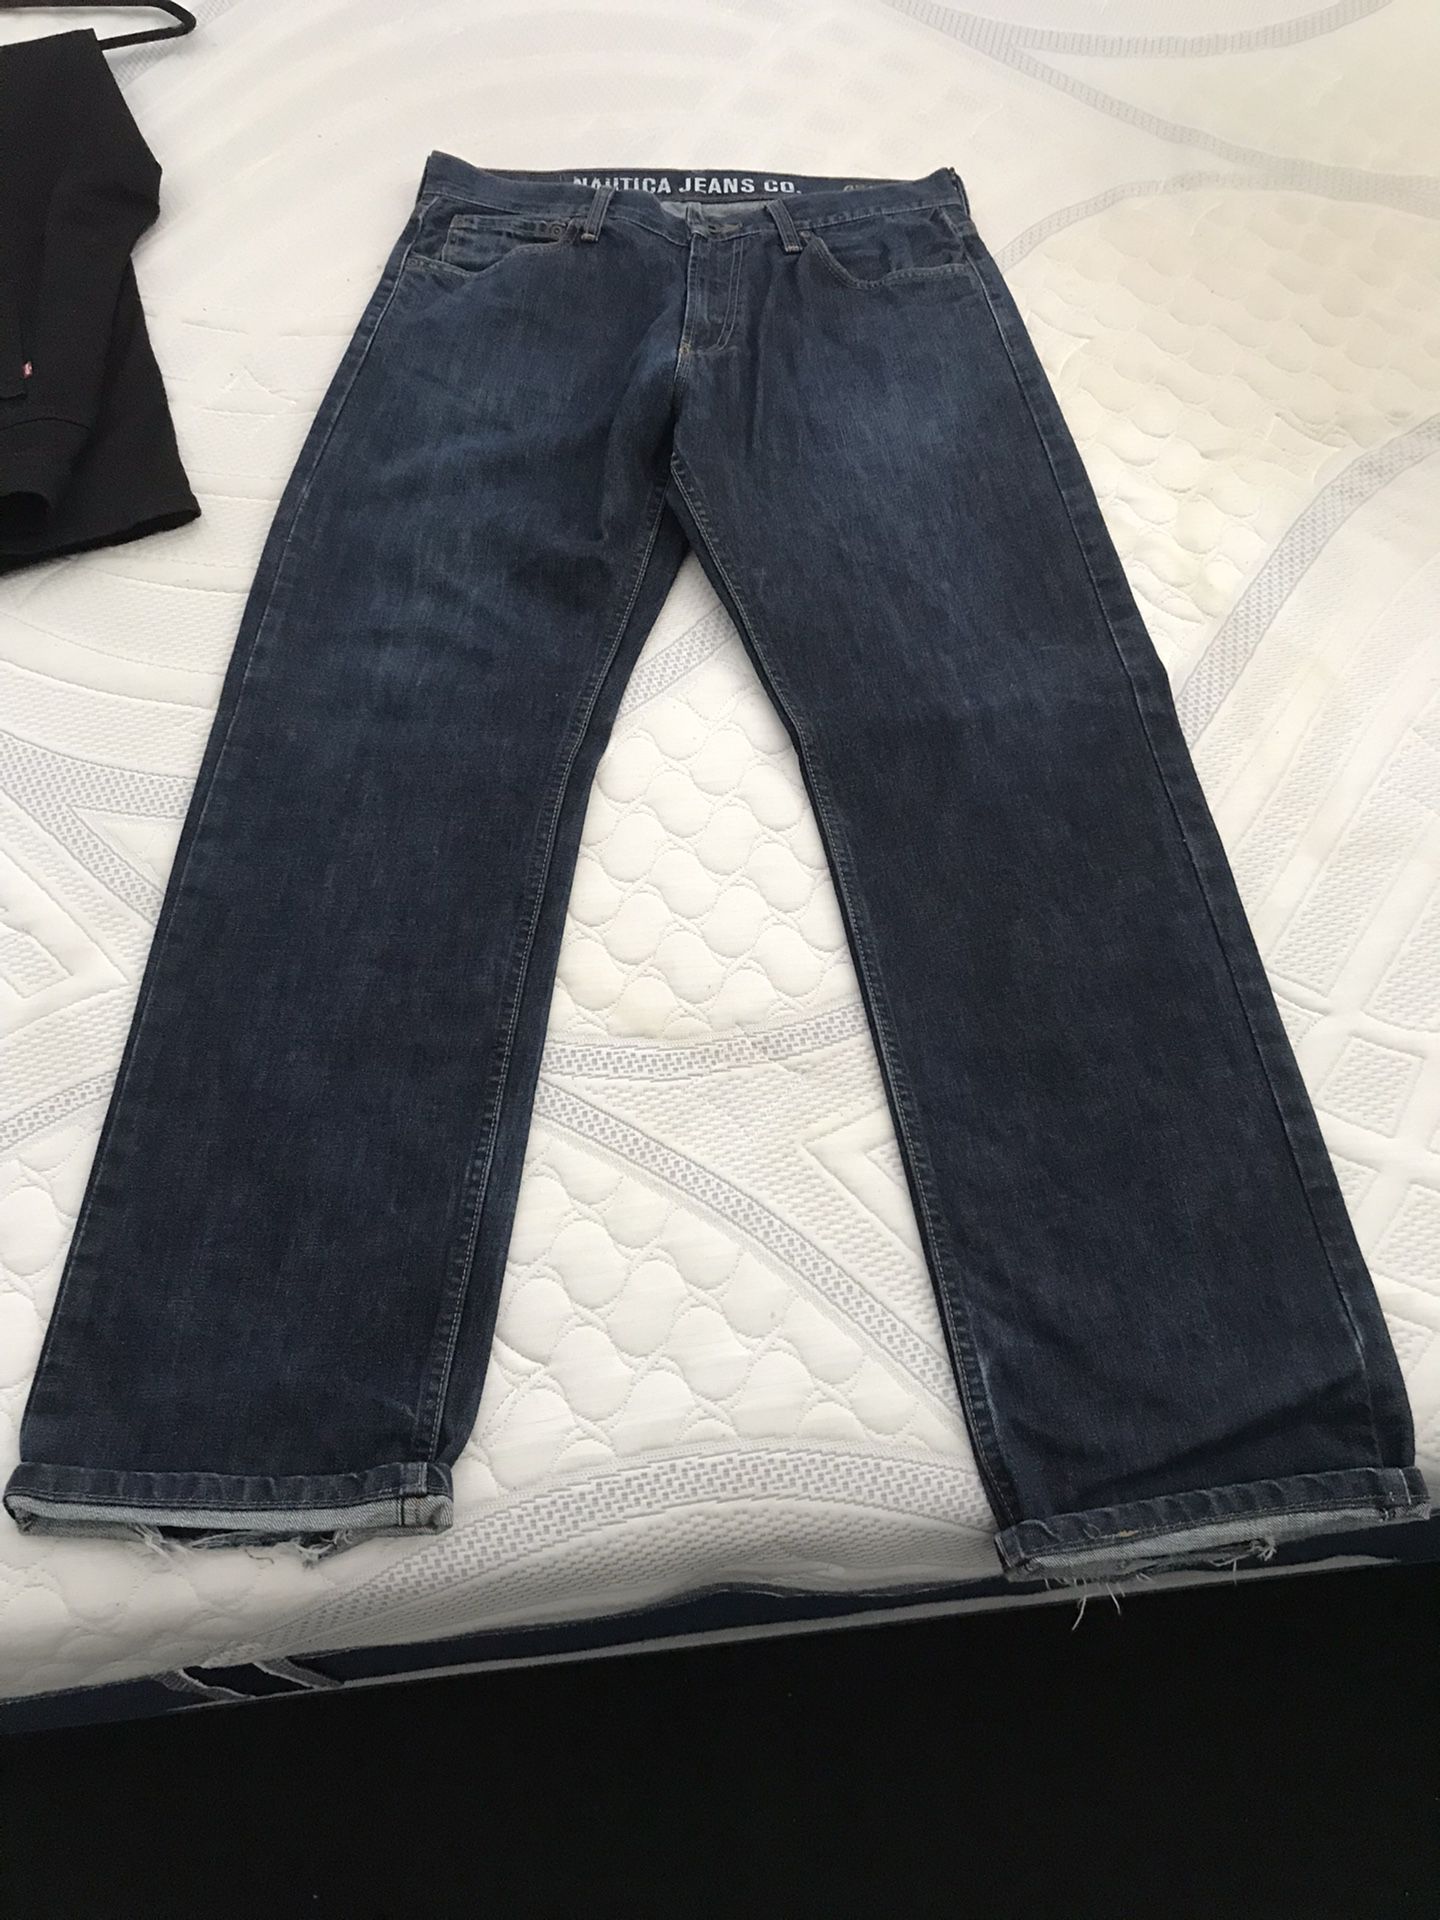 nautica jeans relaxed fit 33x32 dark denim blue